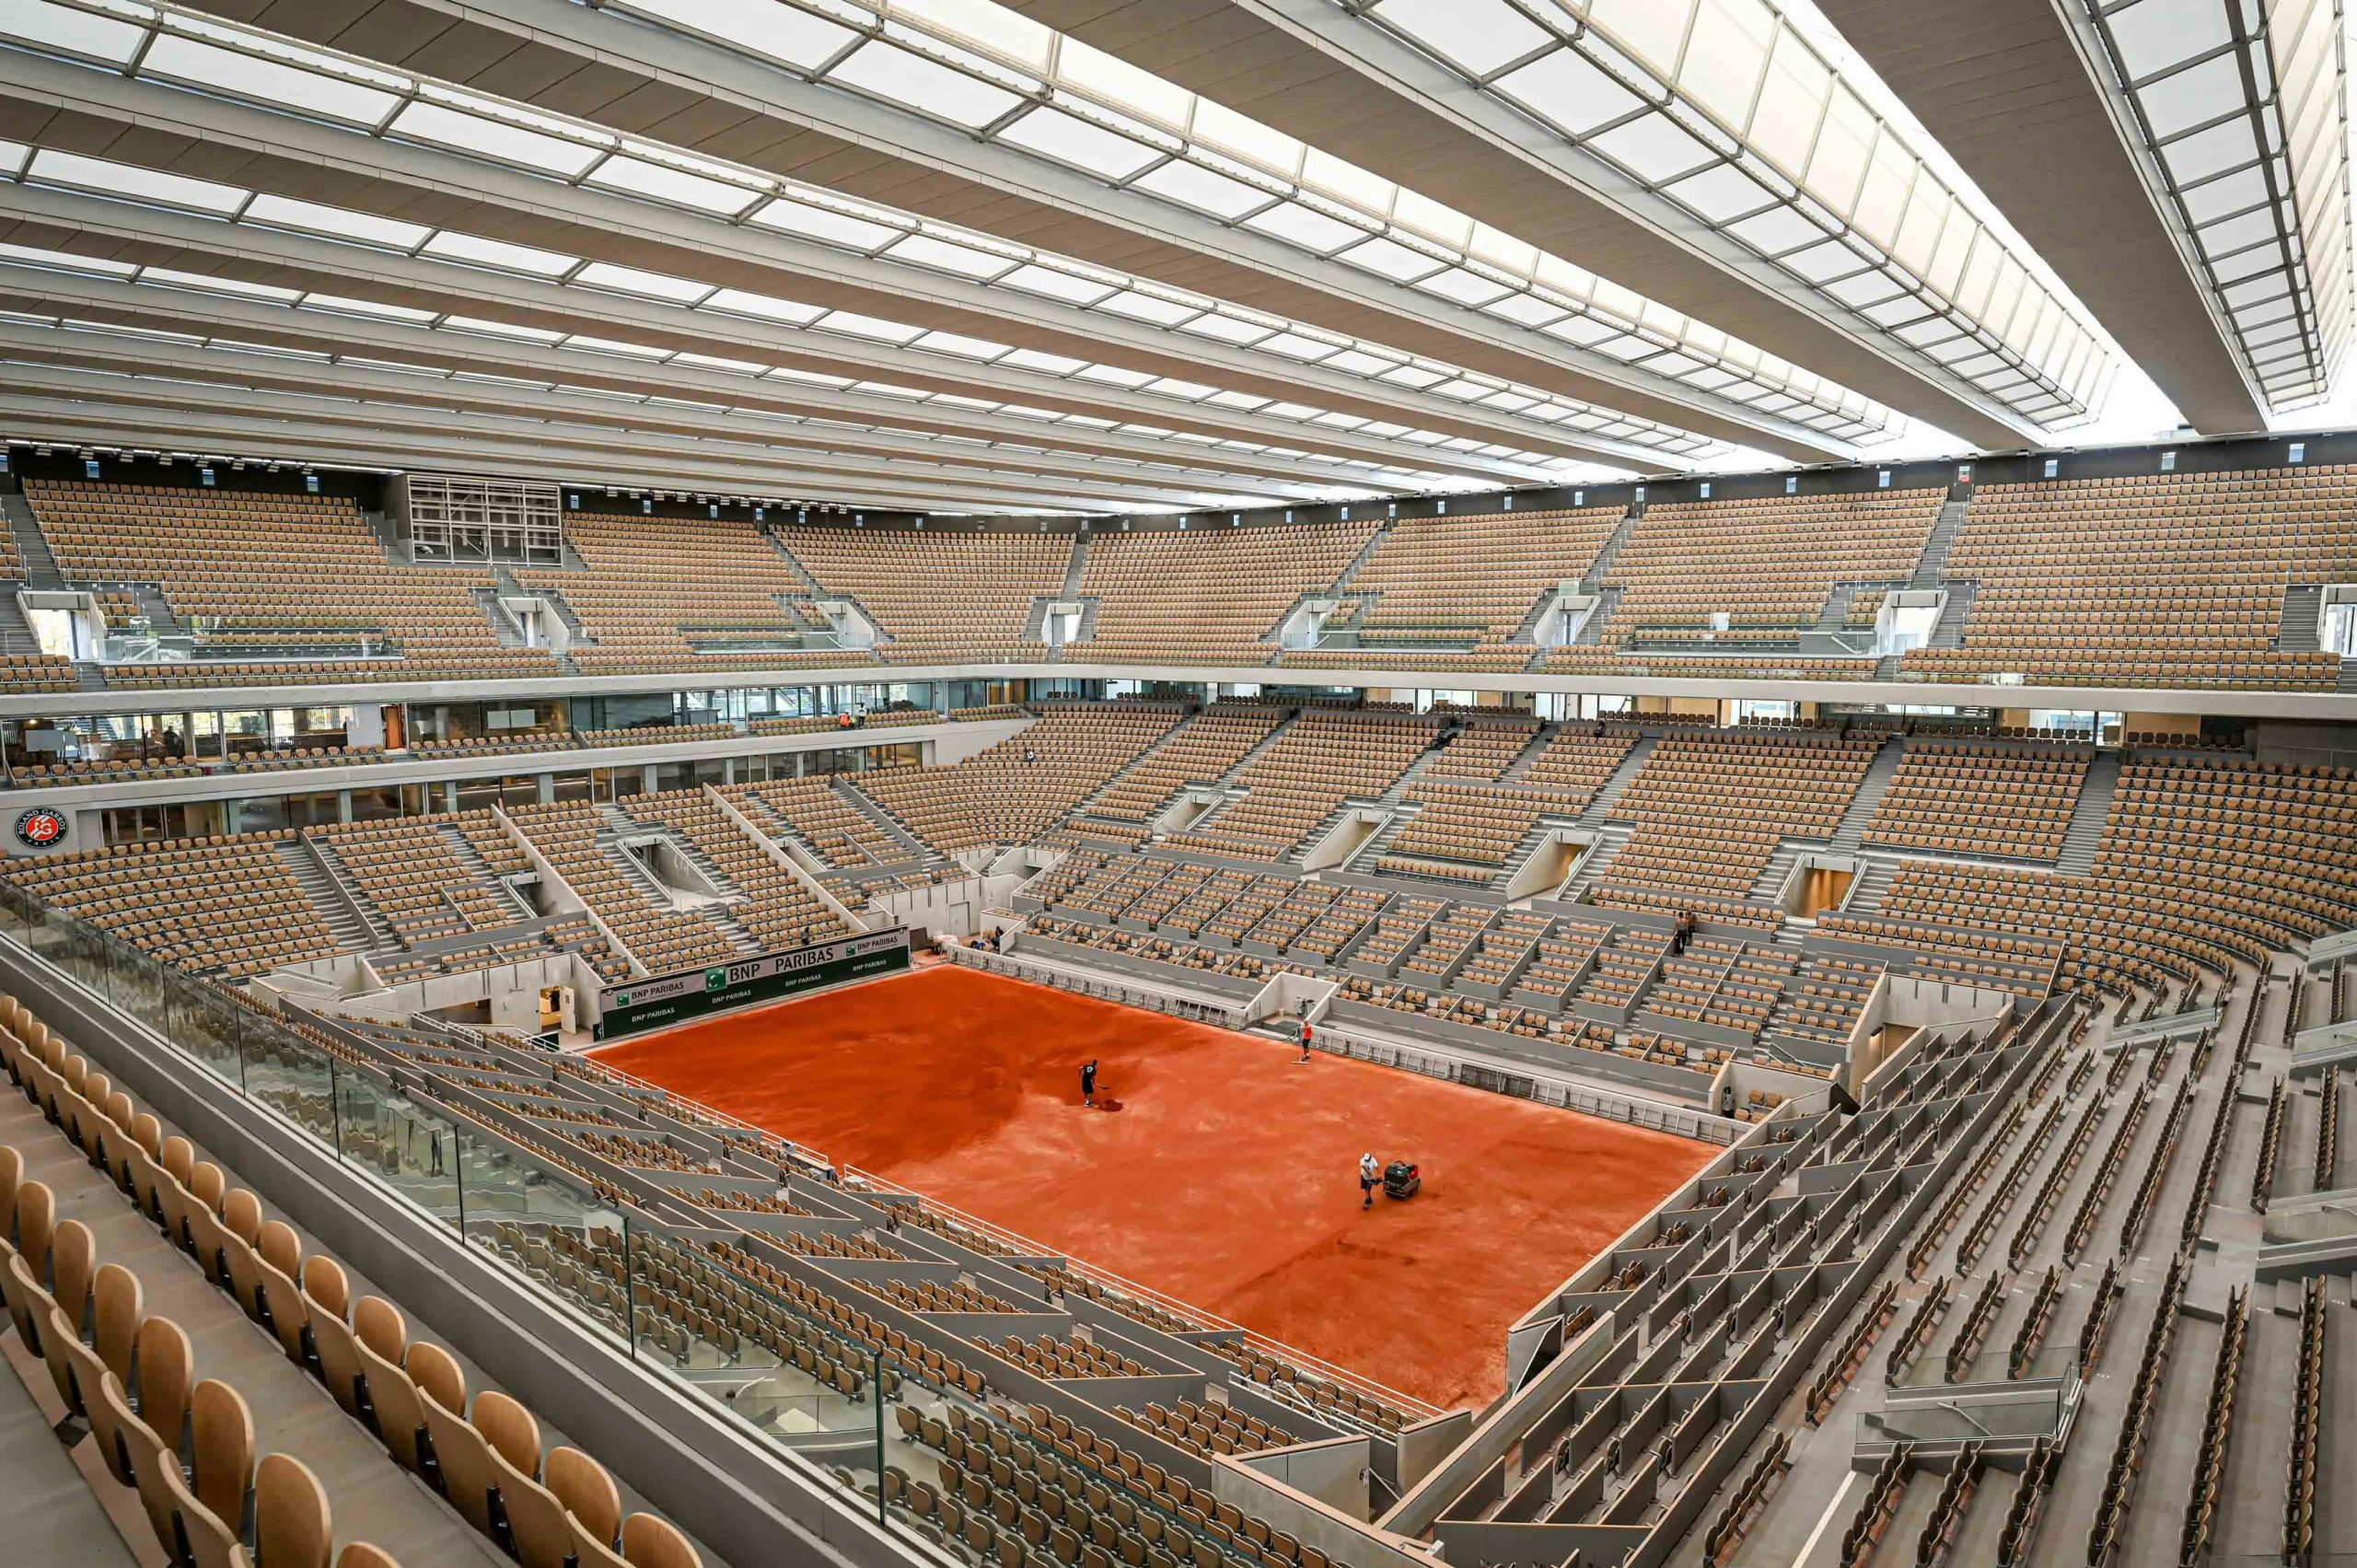 Things To Do at Roland-Garros Stadium Paris Olympics 2024 | Top Attractions, Night Life, Restaurants